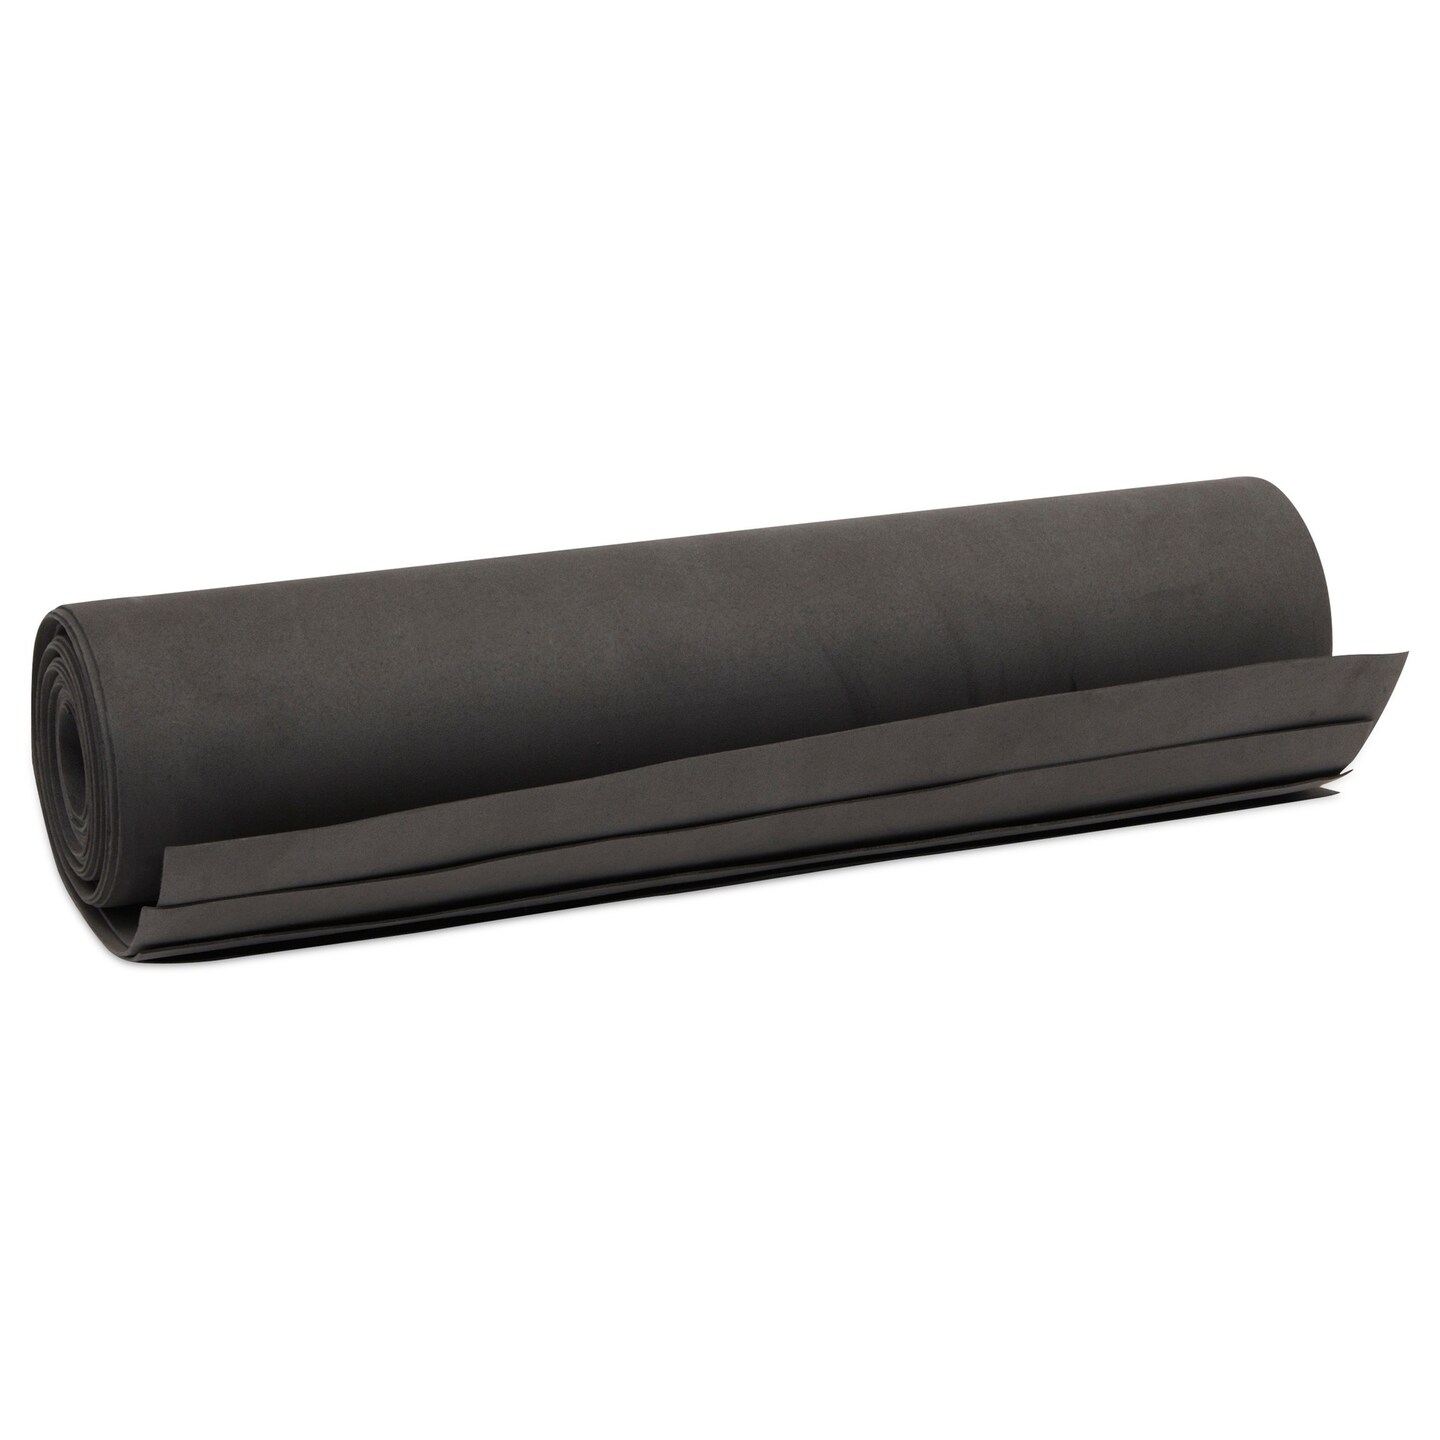 2mm EVA Foam Cosplay Black 14 x 39 inch Sheet Ultra High Density *Free  Shipping